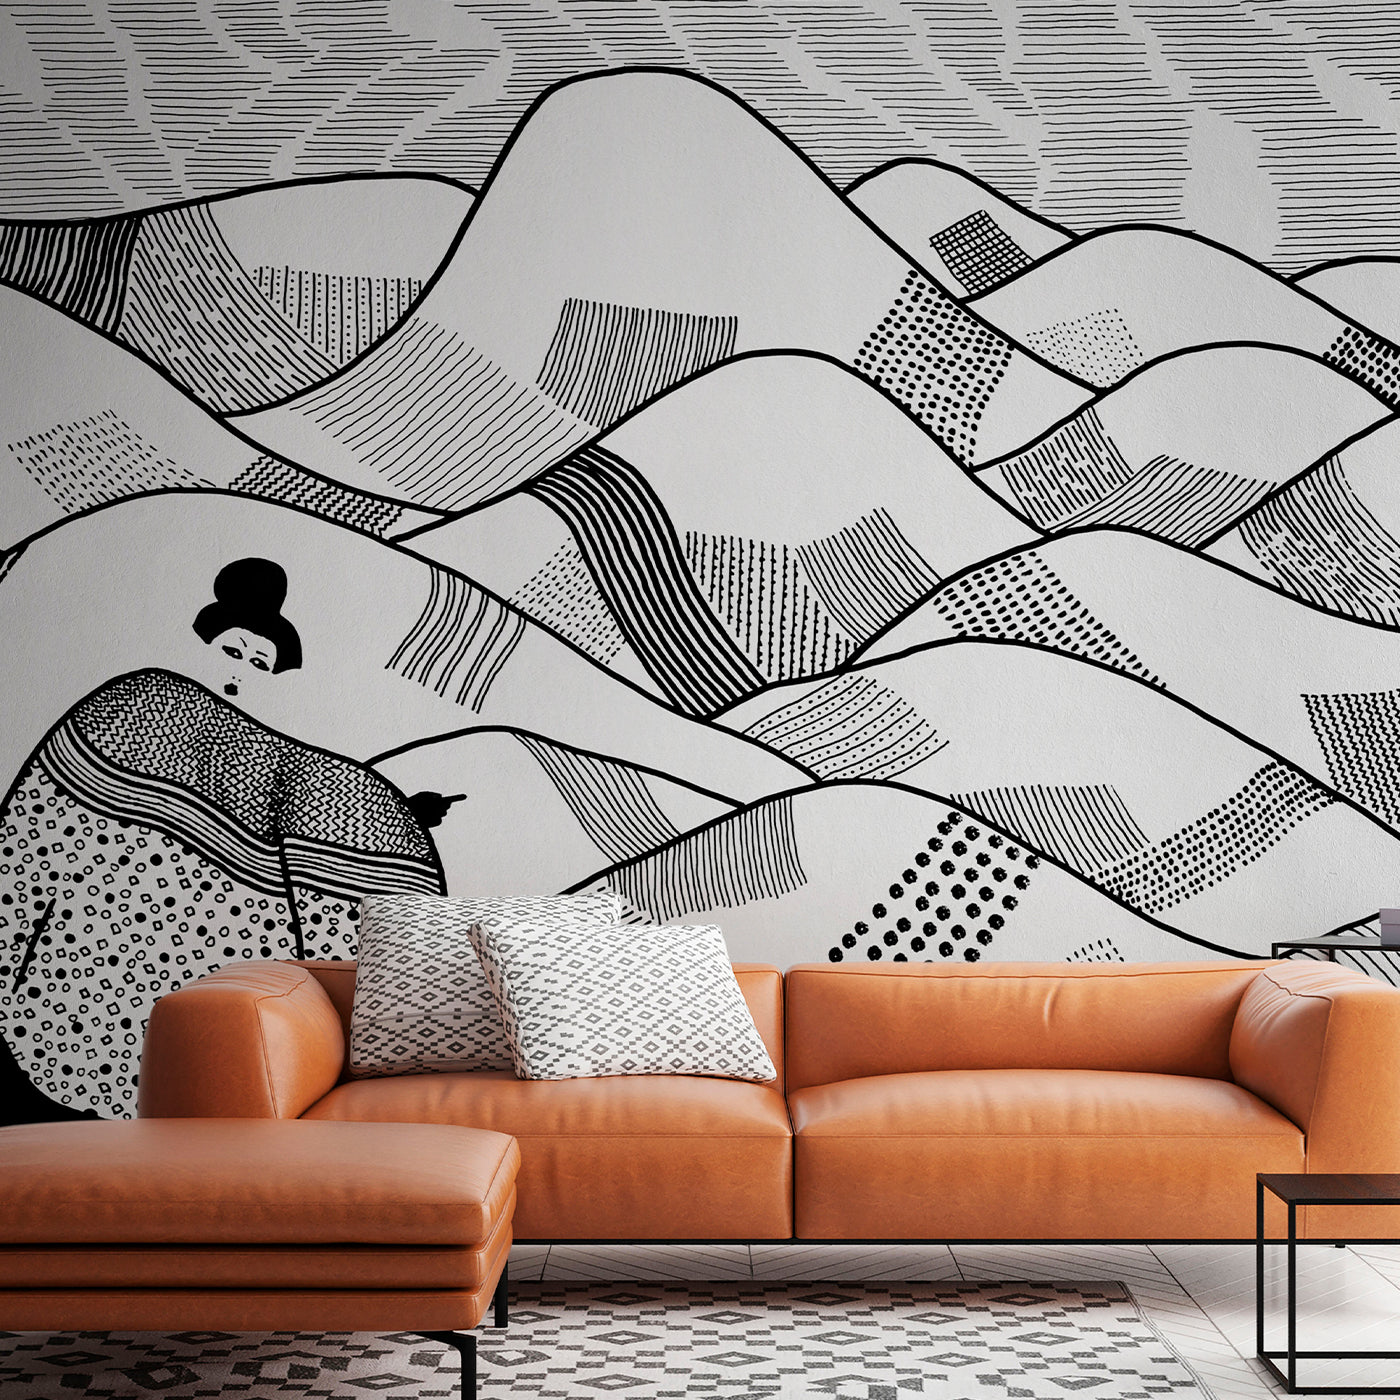 Chinese Mountains Season 1 Textured Wallpaper - Alternative view 1